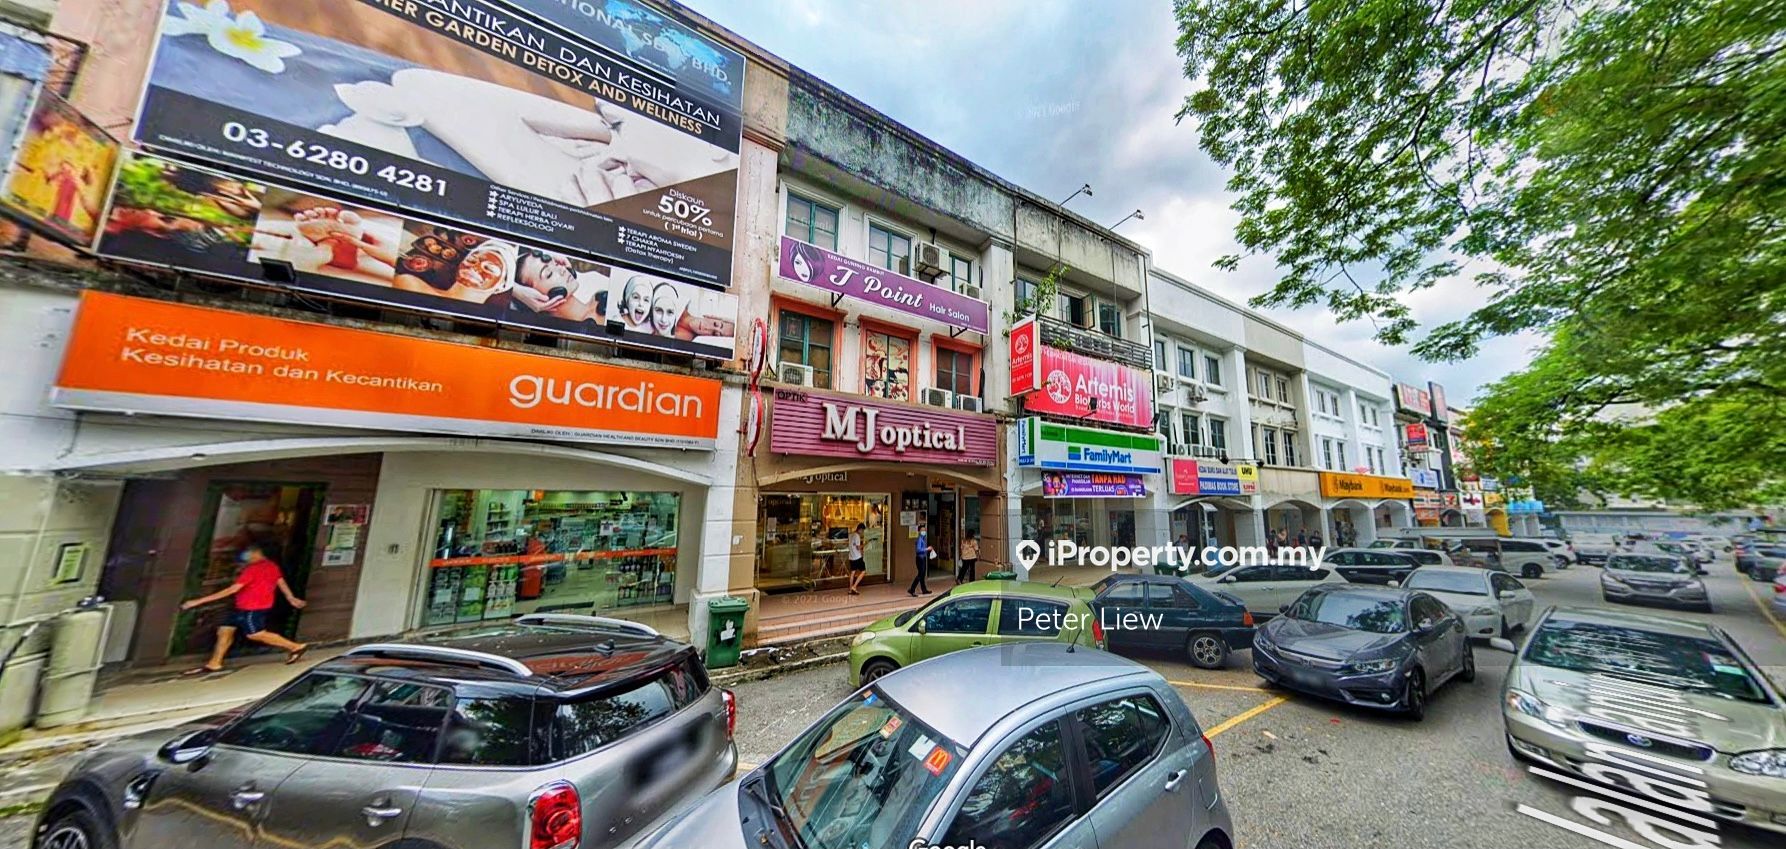 SD13 3Storey Shoplot, Bandar Sri Damansara, Sri Damansara, Petaling Jaya, PetalingJaya, Bandar Sri Damansara, Sri Damansara, Petaling Jaya, Bandar Sri Damansara